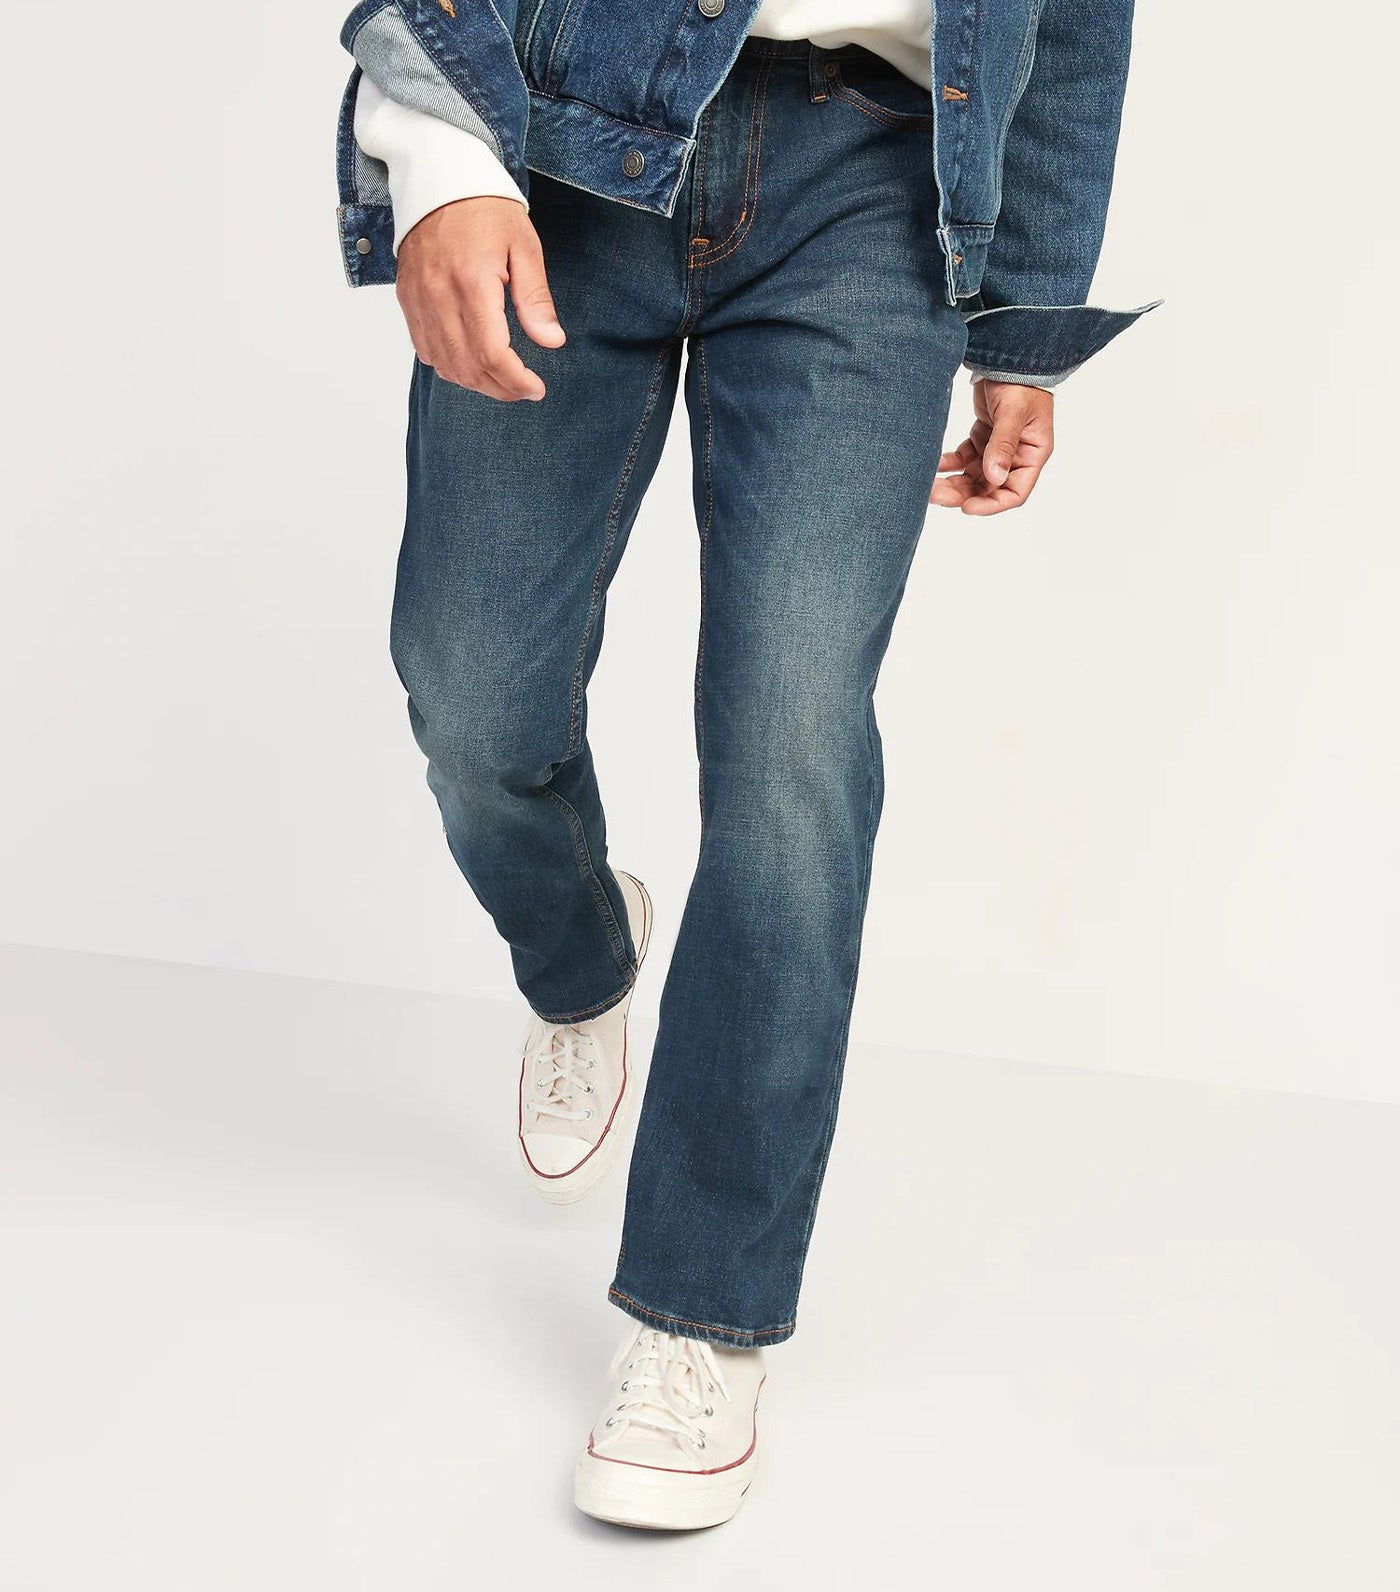 Straight Built-In Flex Jeans for Men Dark Wash